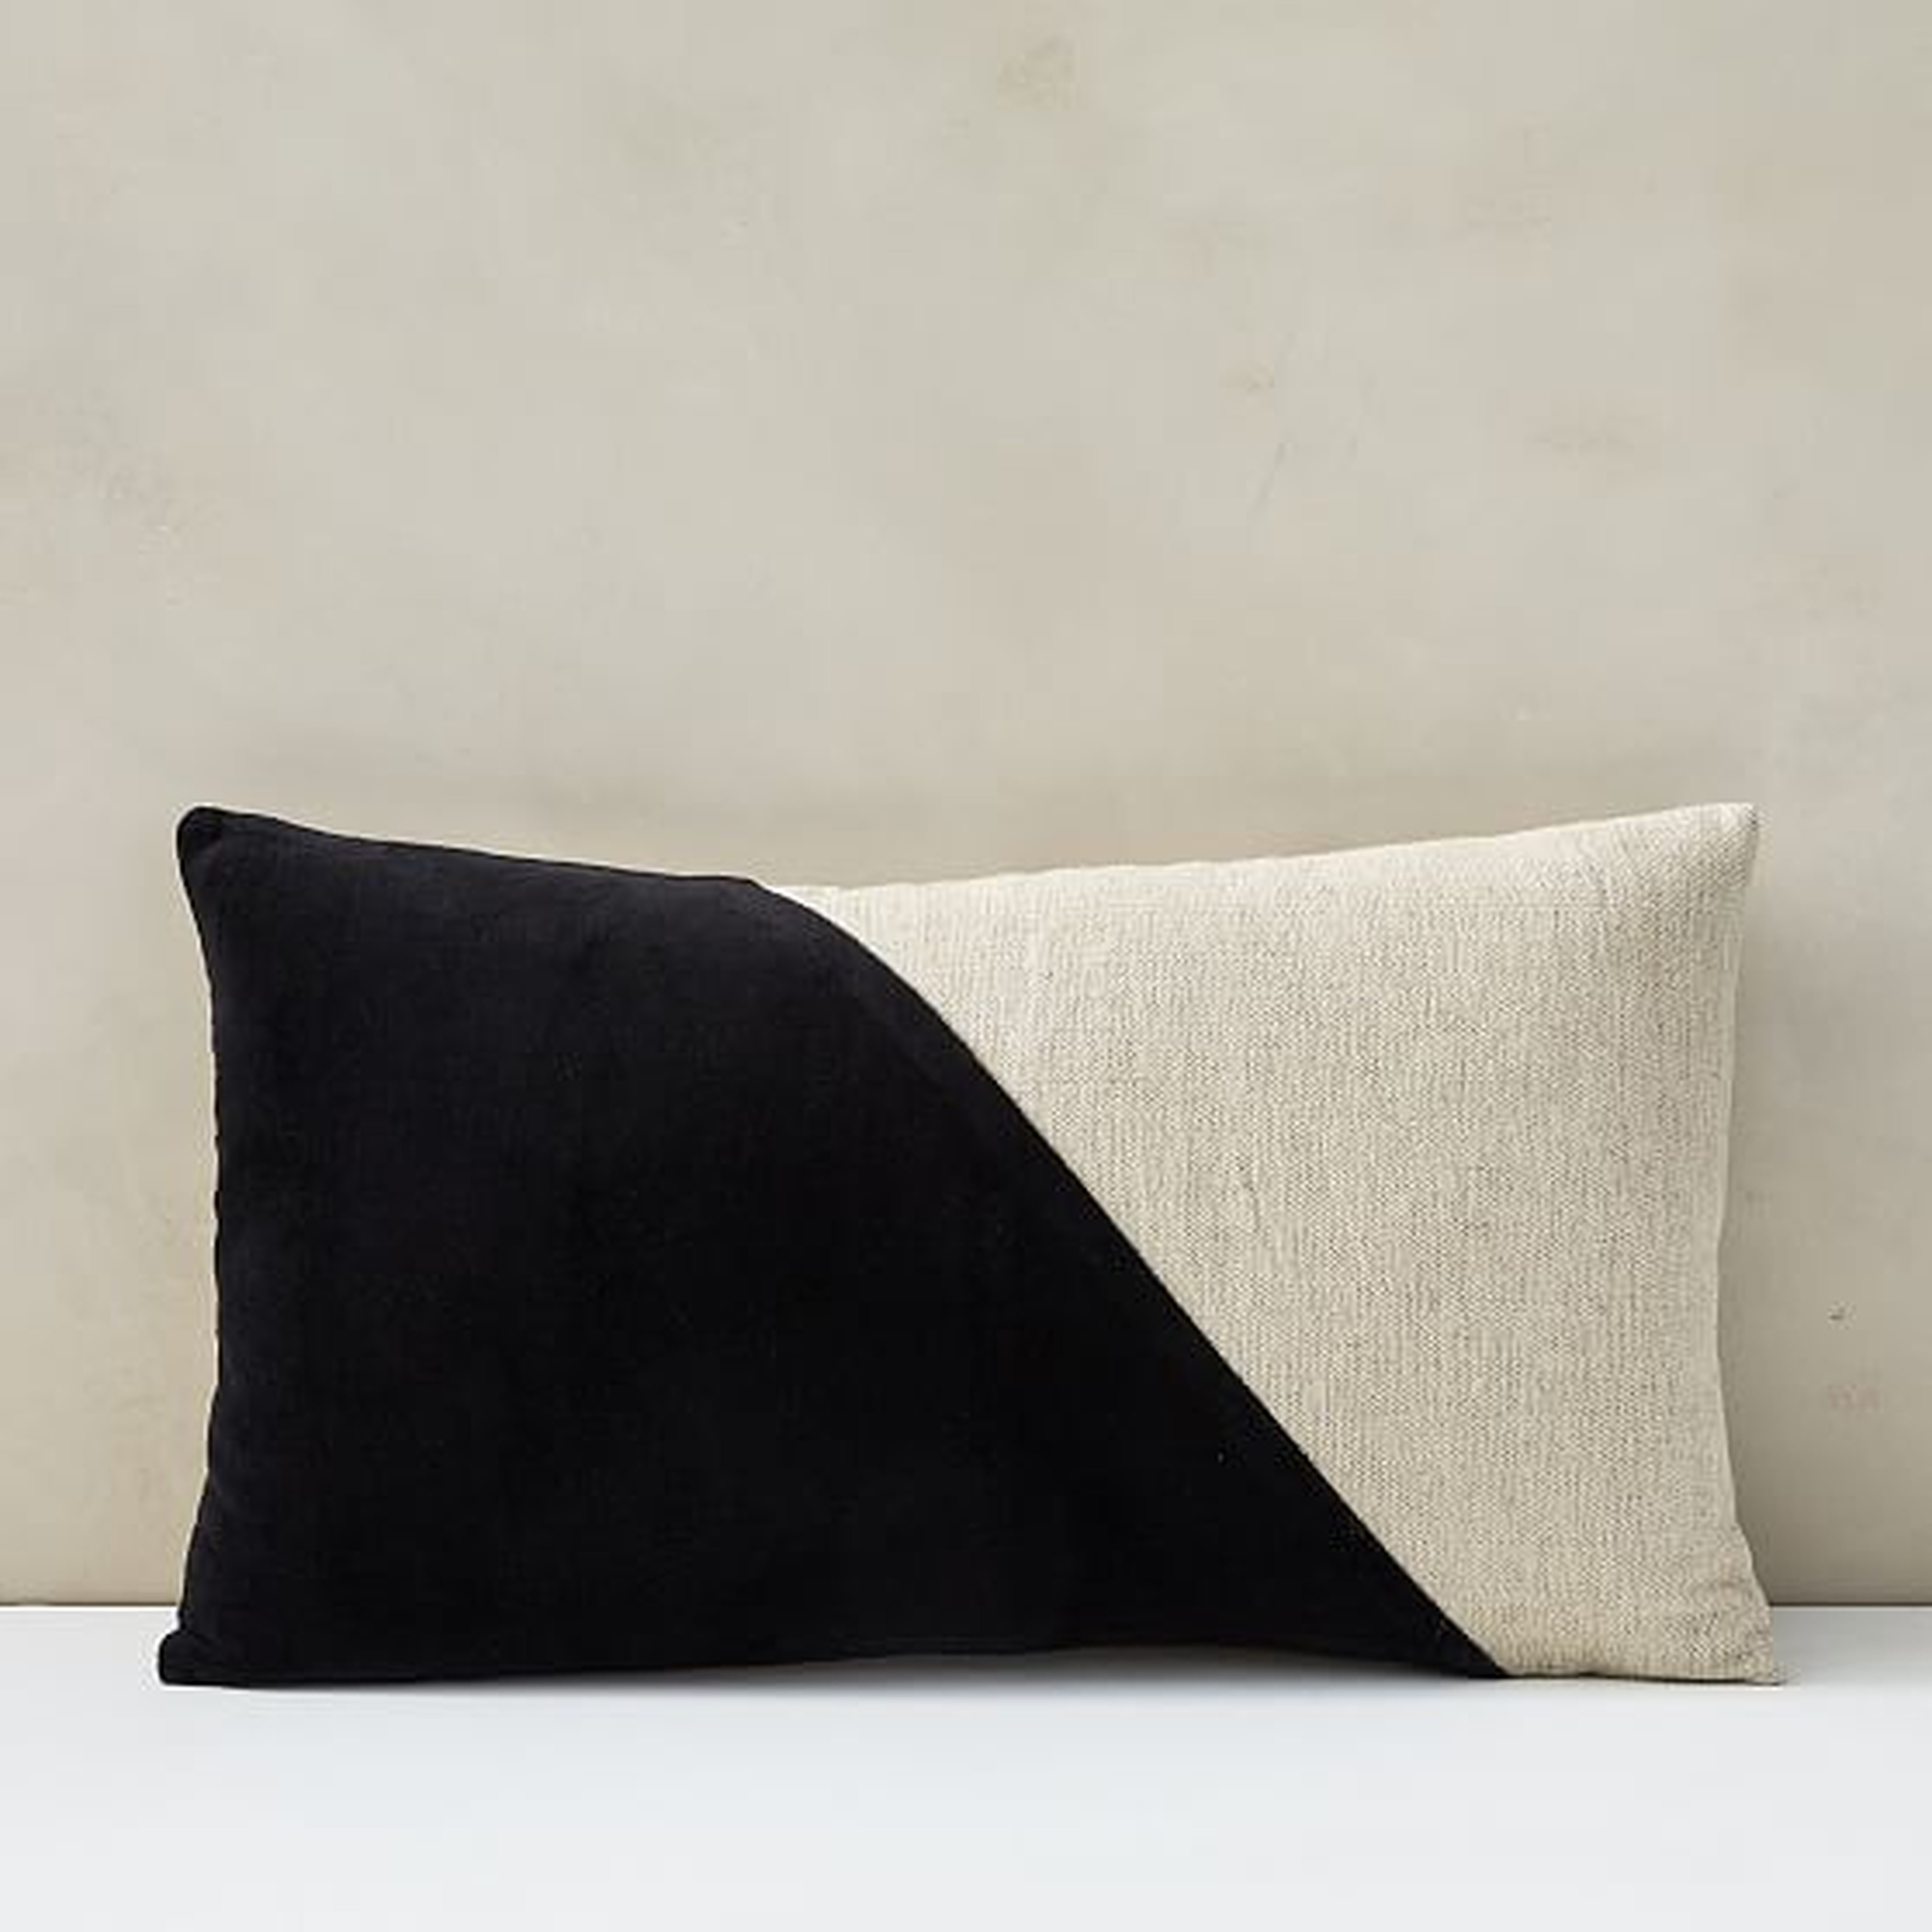 Cotton Linen + Velvet Lumbar Pillow Cover with Down Alternative Insert, Black, 12"x21" - West Elm